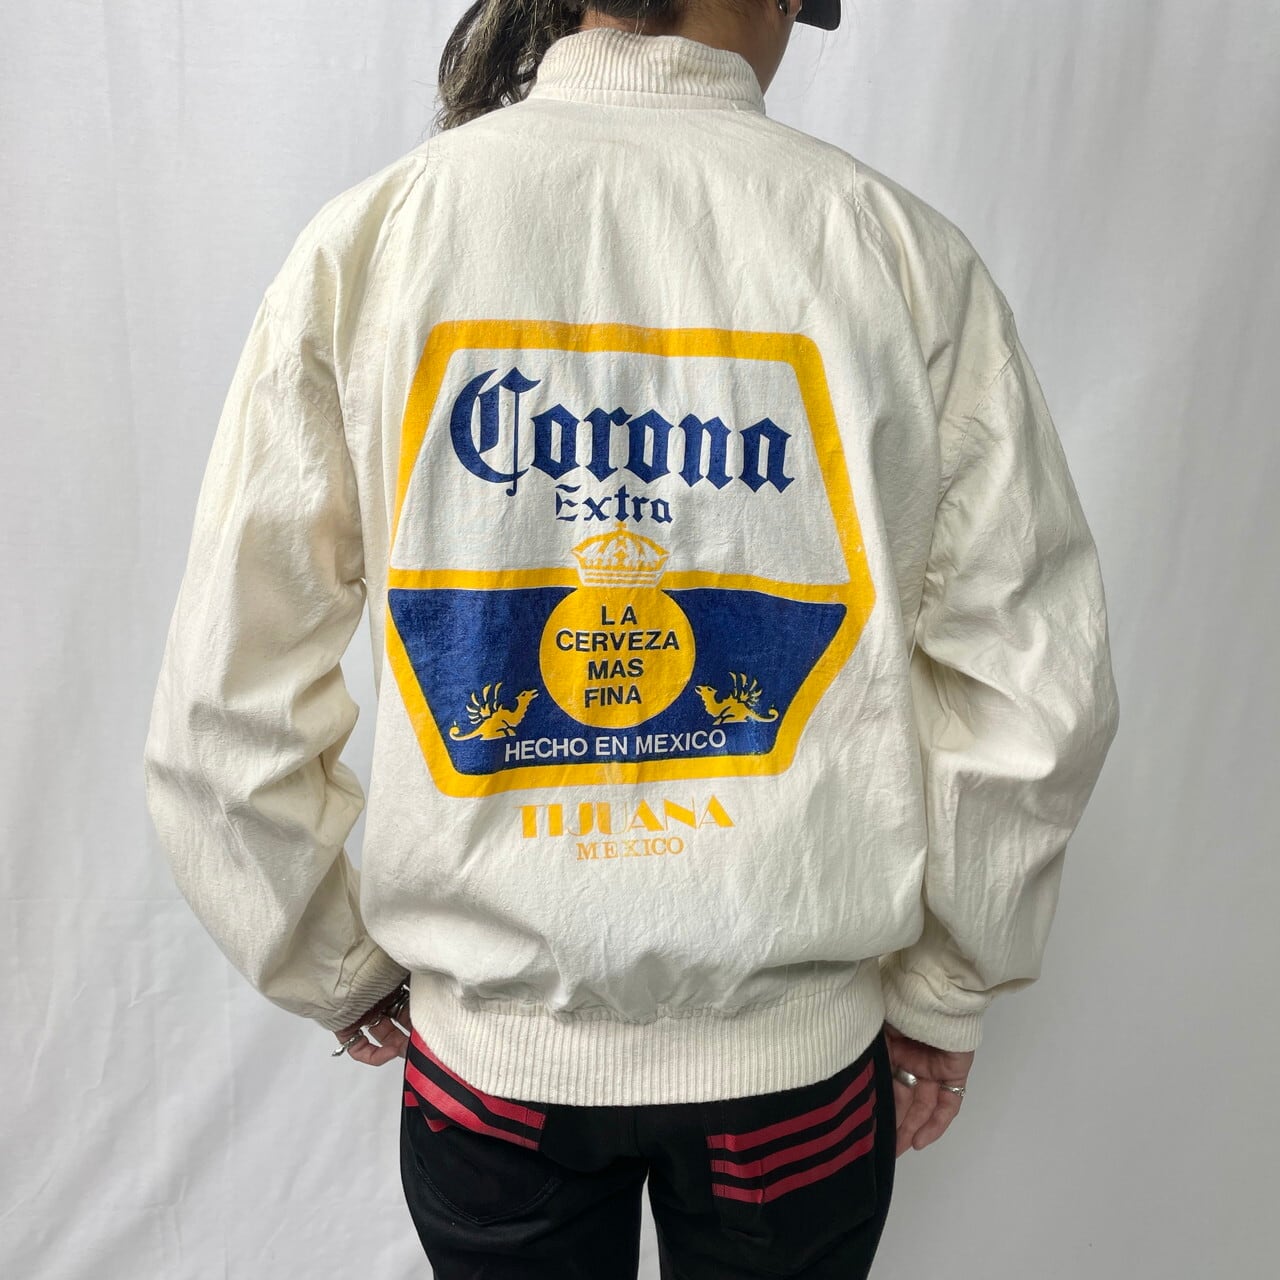 90s アメリカ製 CORONA EXTRA コロナビール BEER 企業 - Tシャツ